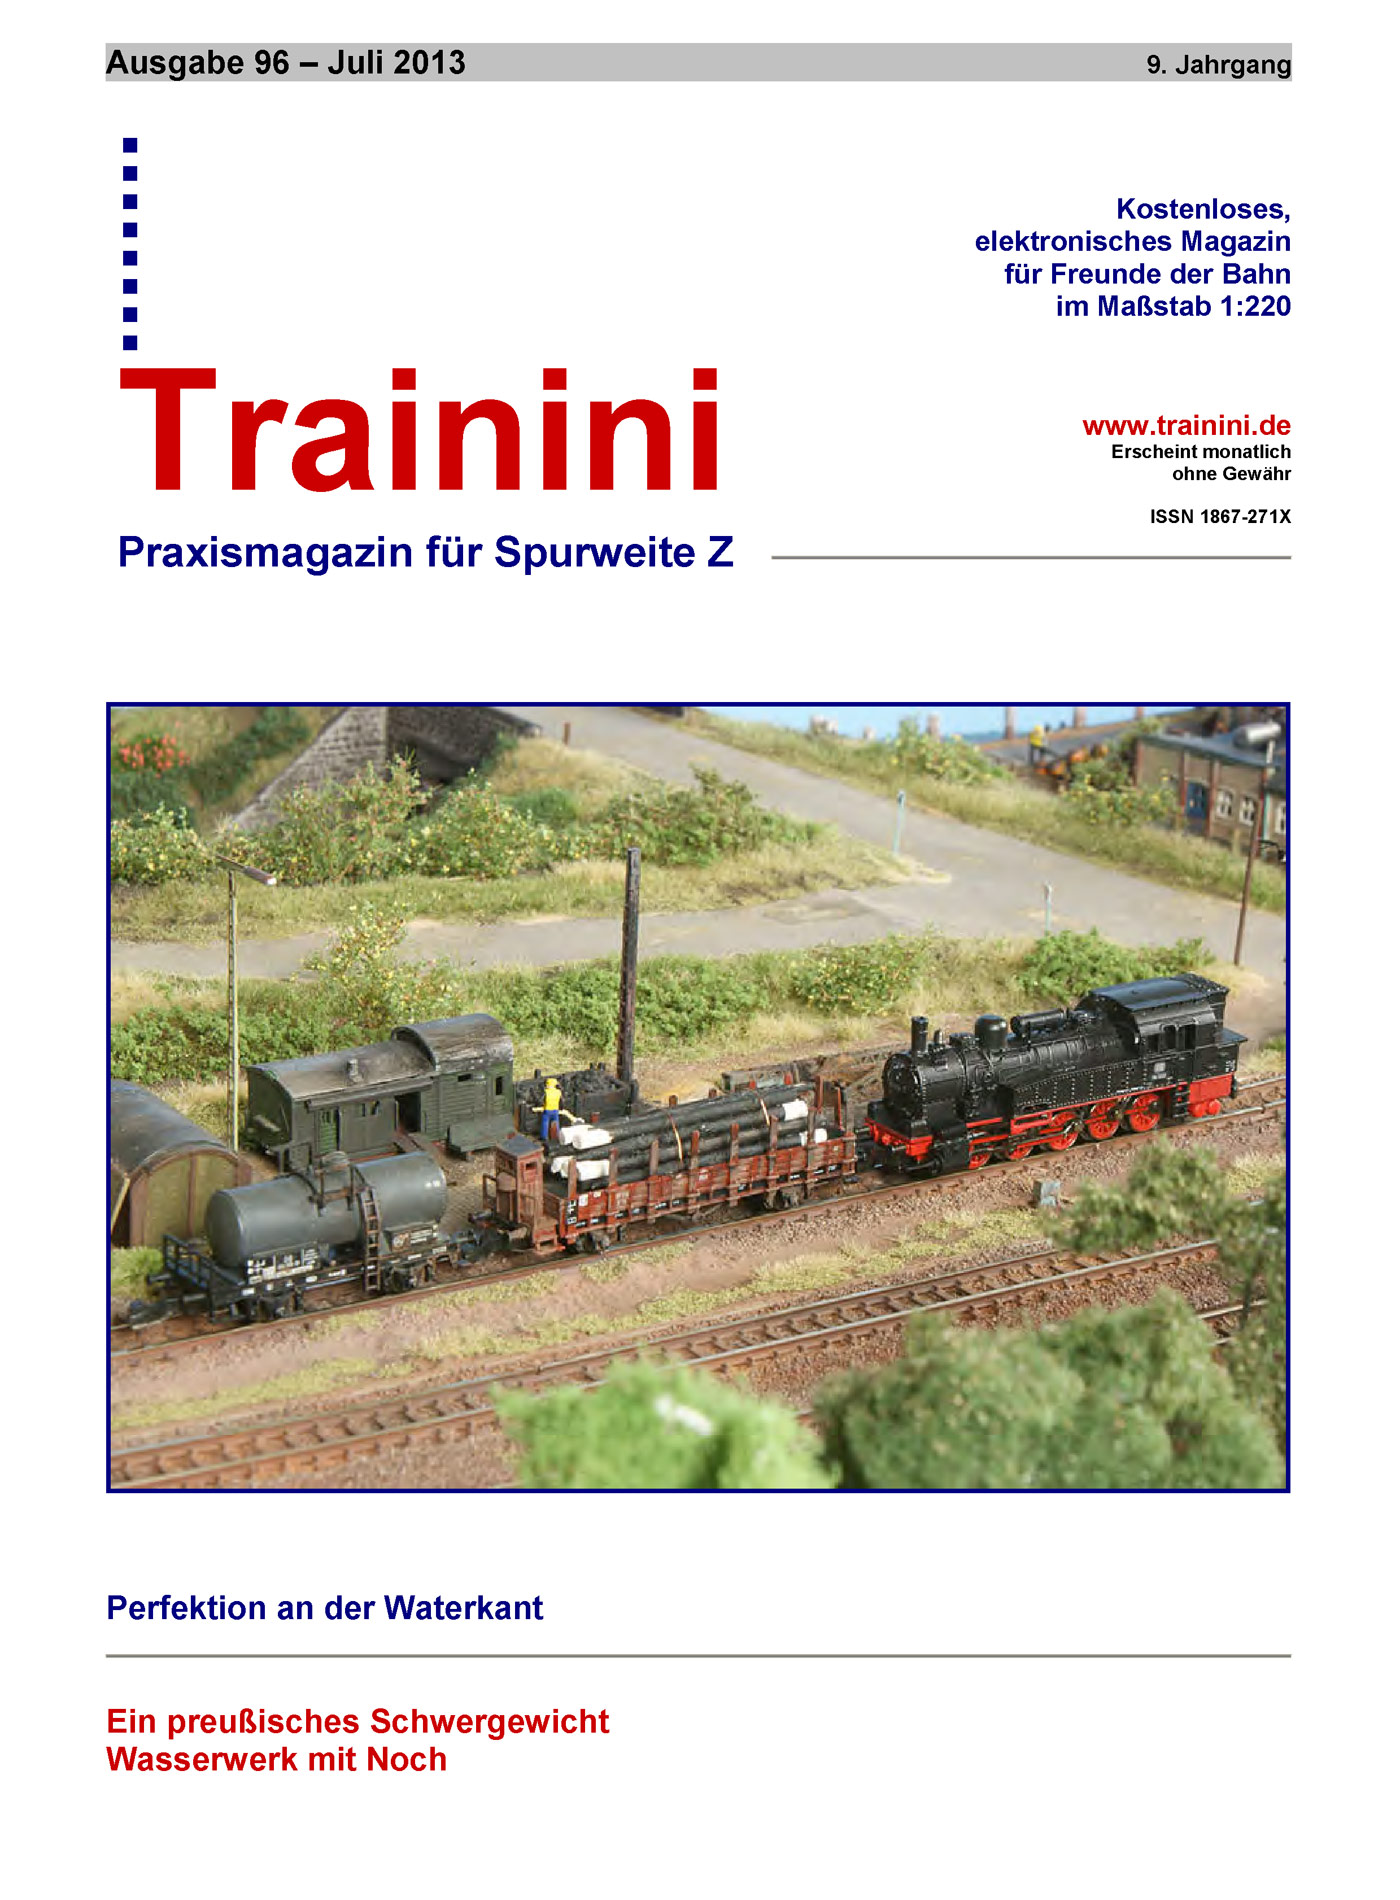 Trainini Ausgabe Juli 2013